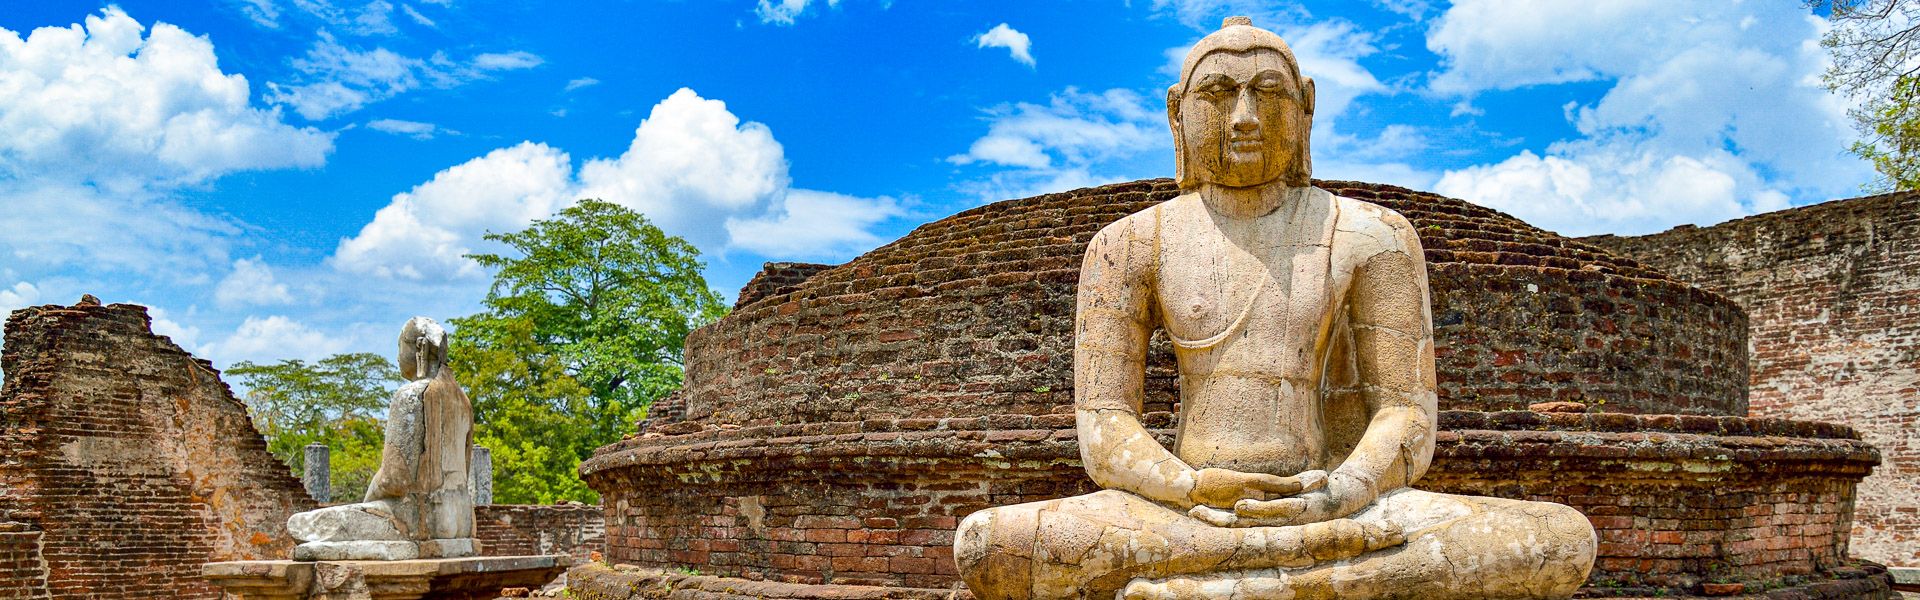 Buddhas von Polonnaruwa |  Michael Brem / Chamleon